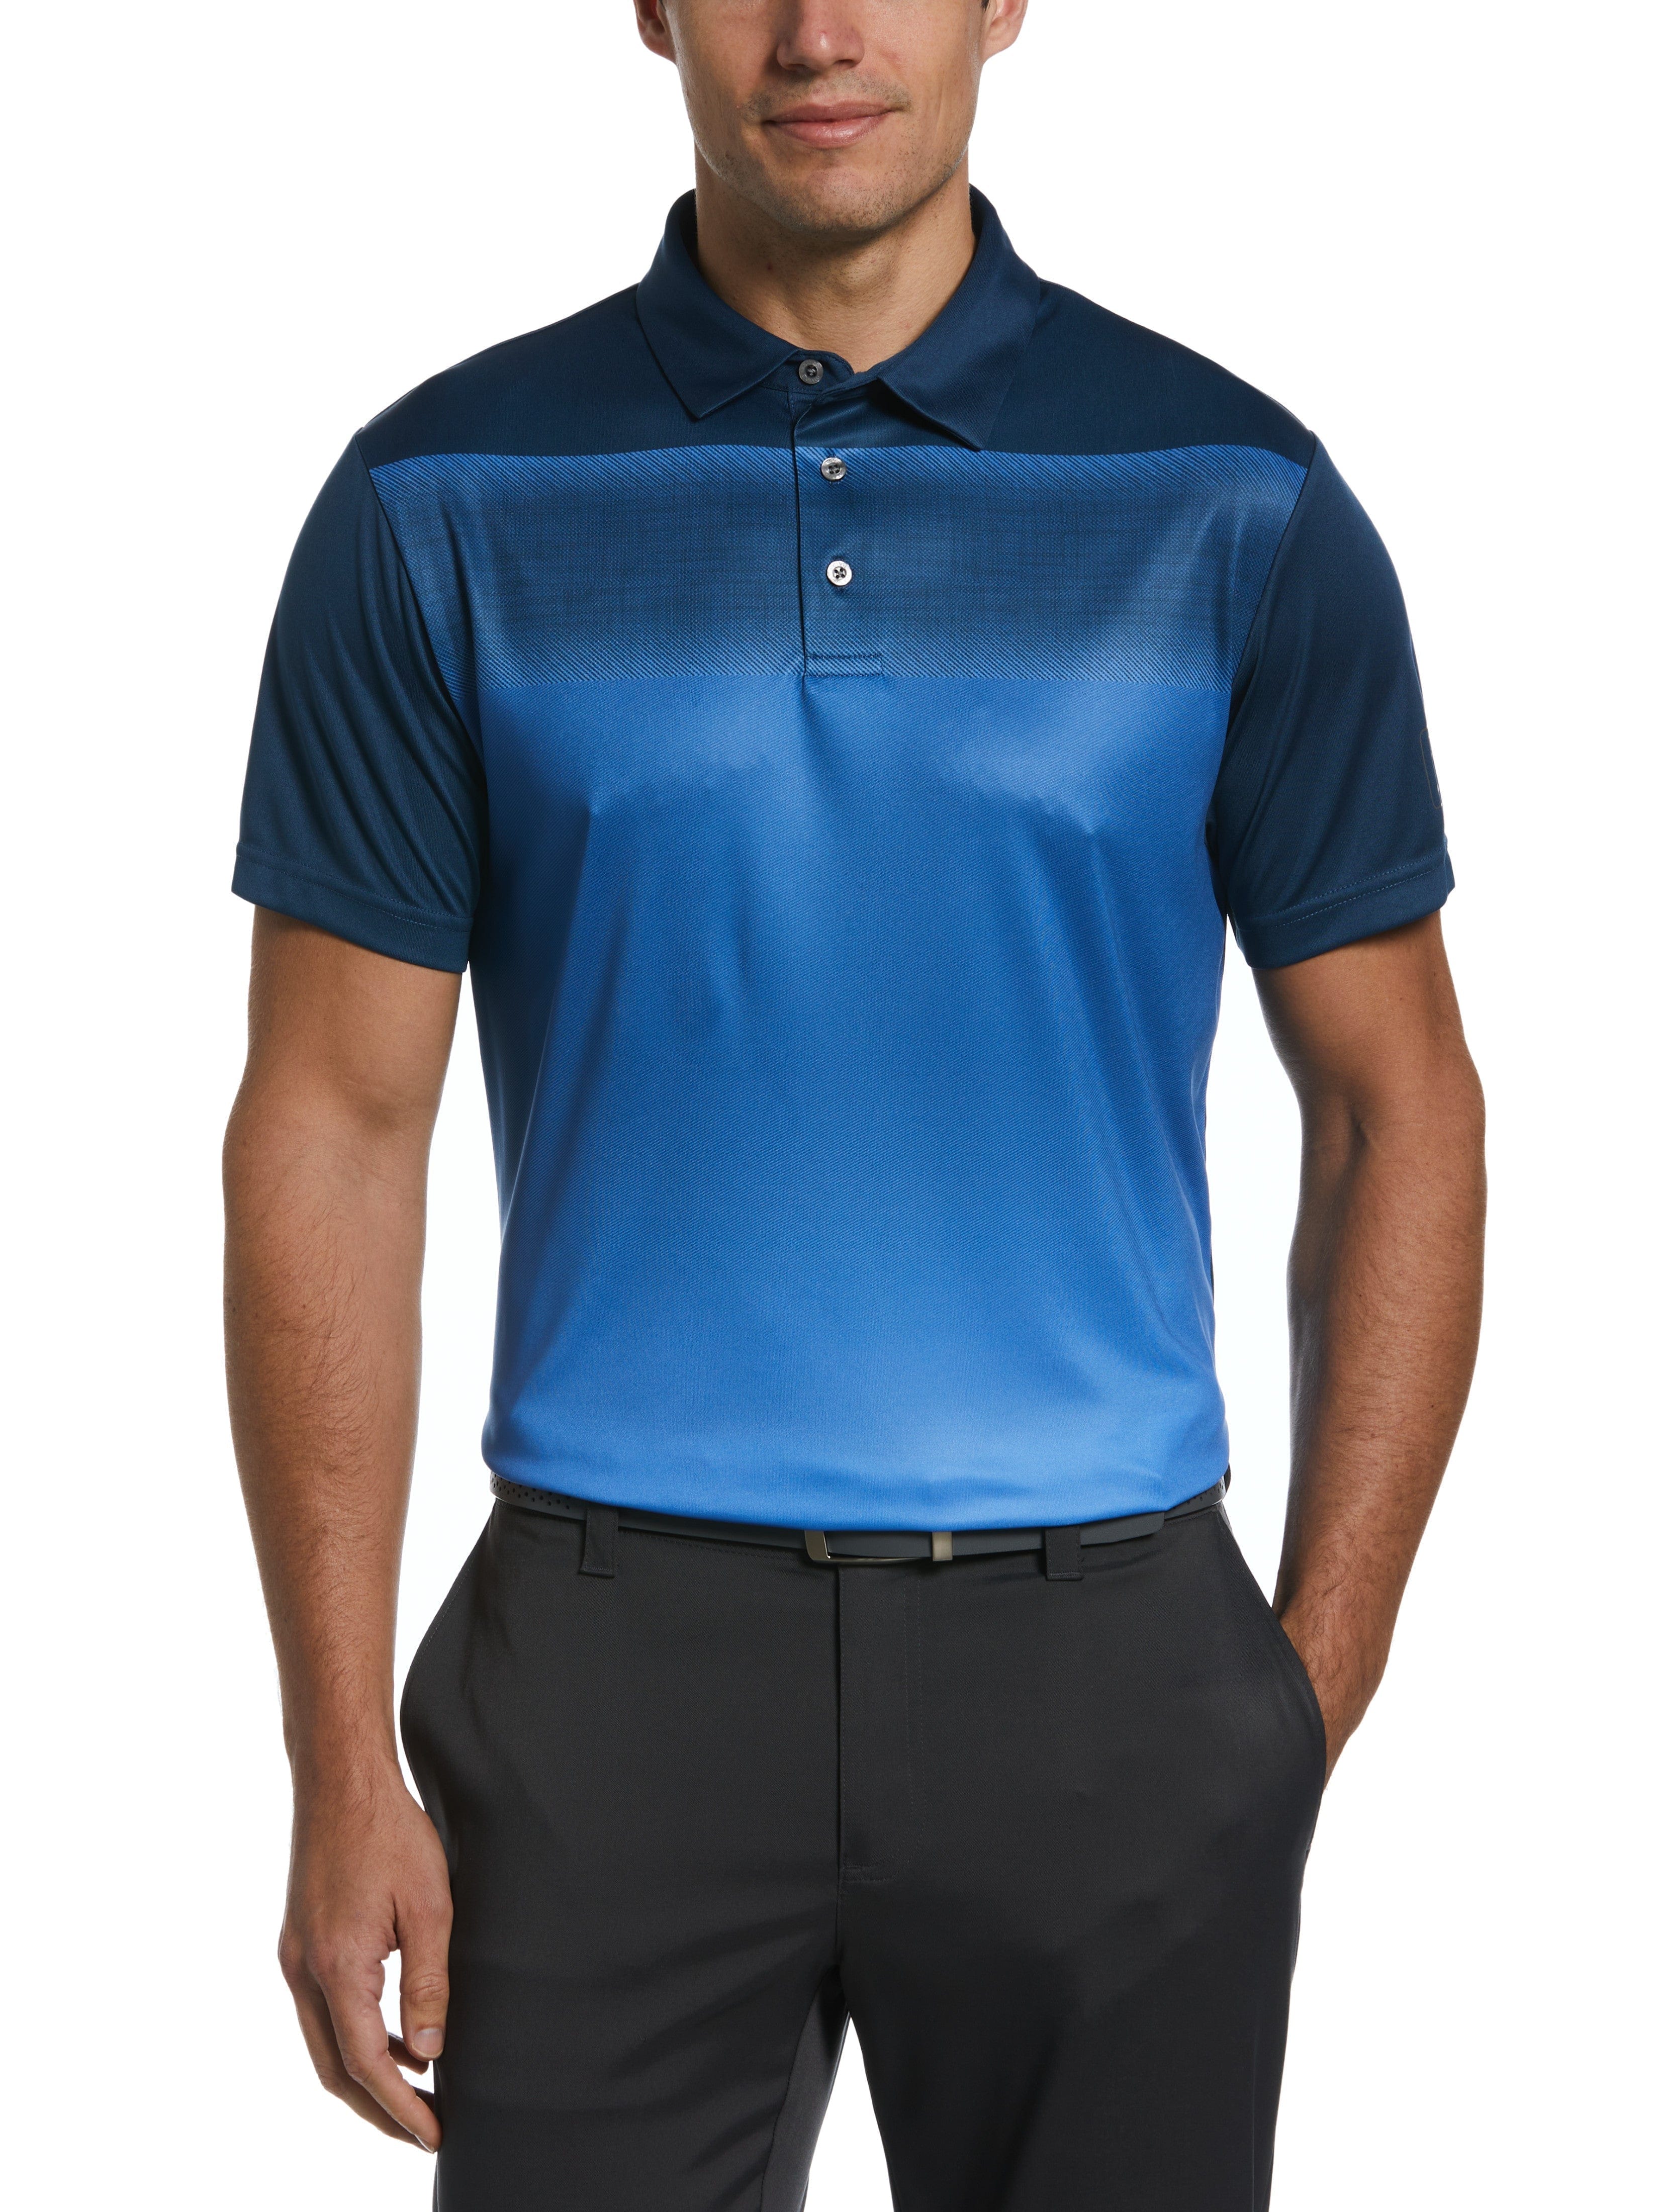 PGA TOUR Apparel Mens Blocked Print Golf Polo Shirt, Size Medium, Poseidon Blue, 100% Polyester | Golf Apparel Shop